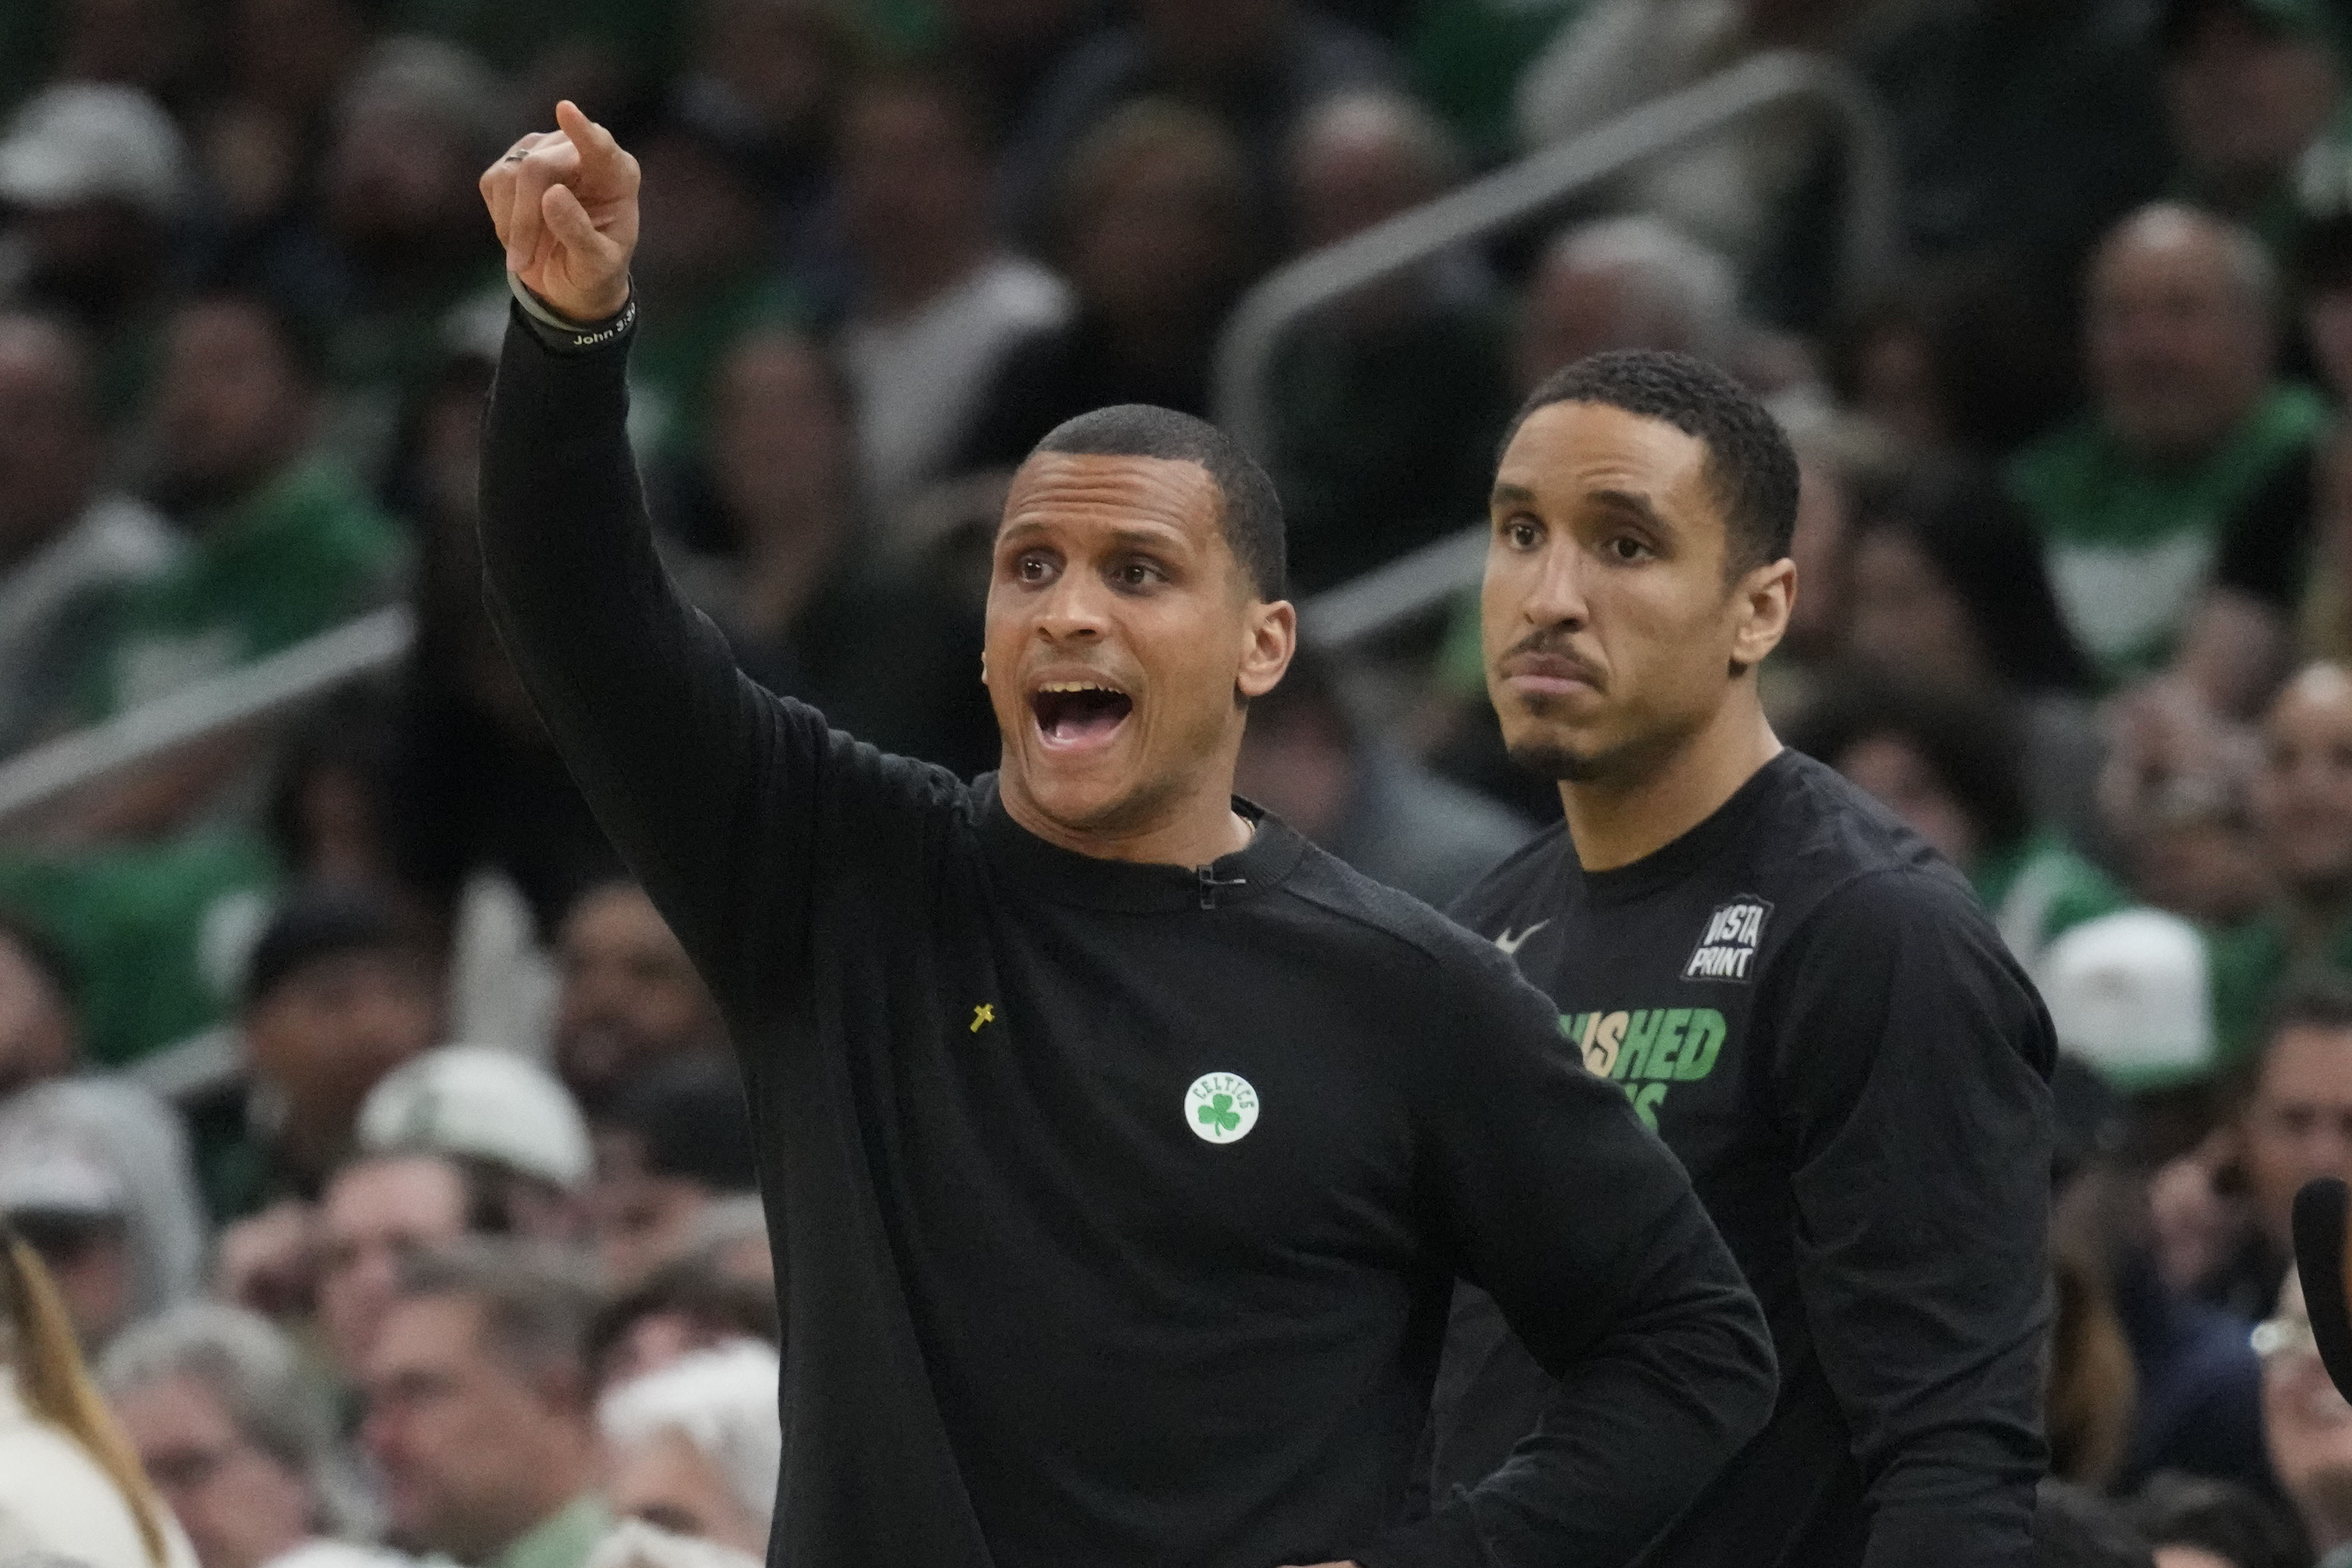 Joe Mazzulla puts strange spin on Celtics' Game 1 loss to Heat